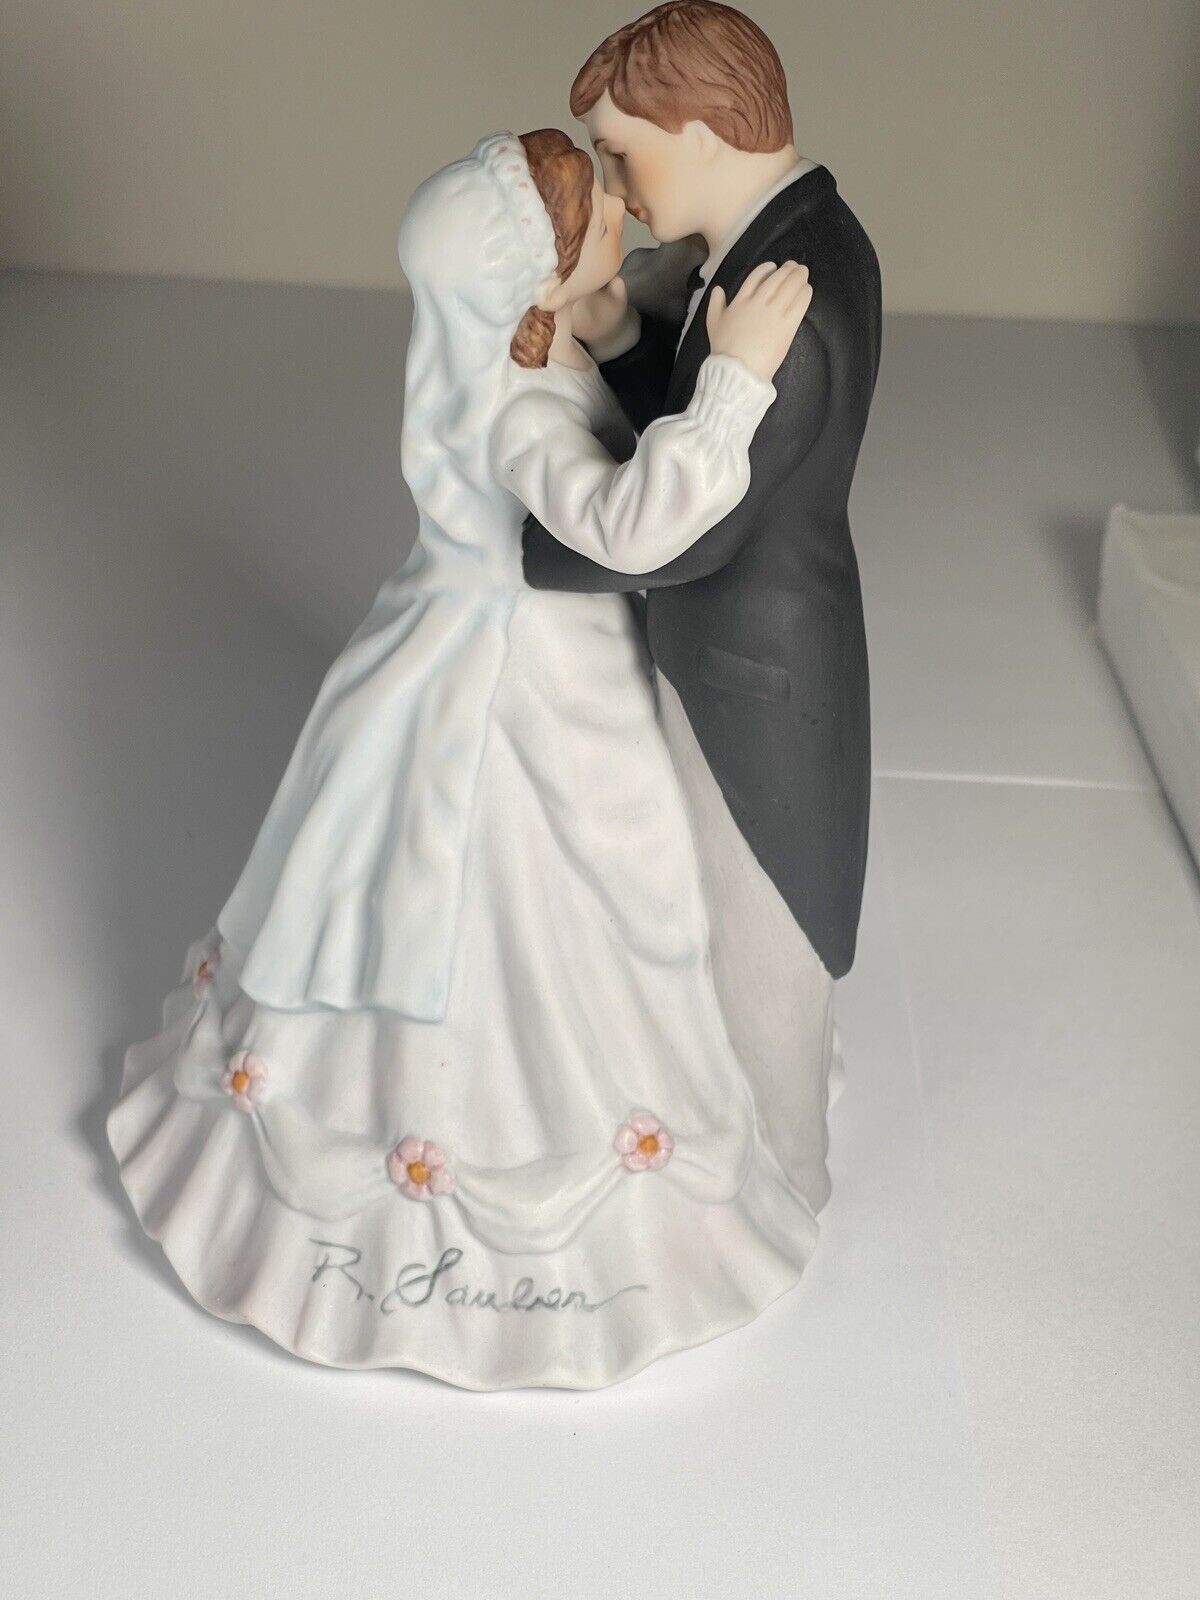 Bride And Groom Figurine “The Wedding” By Rob Sauber 1987